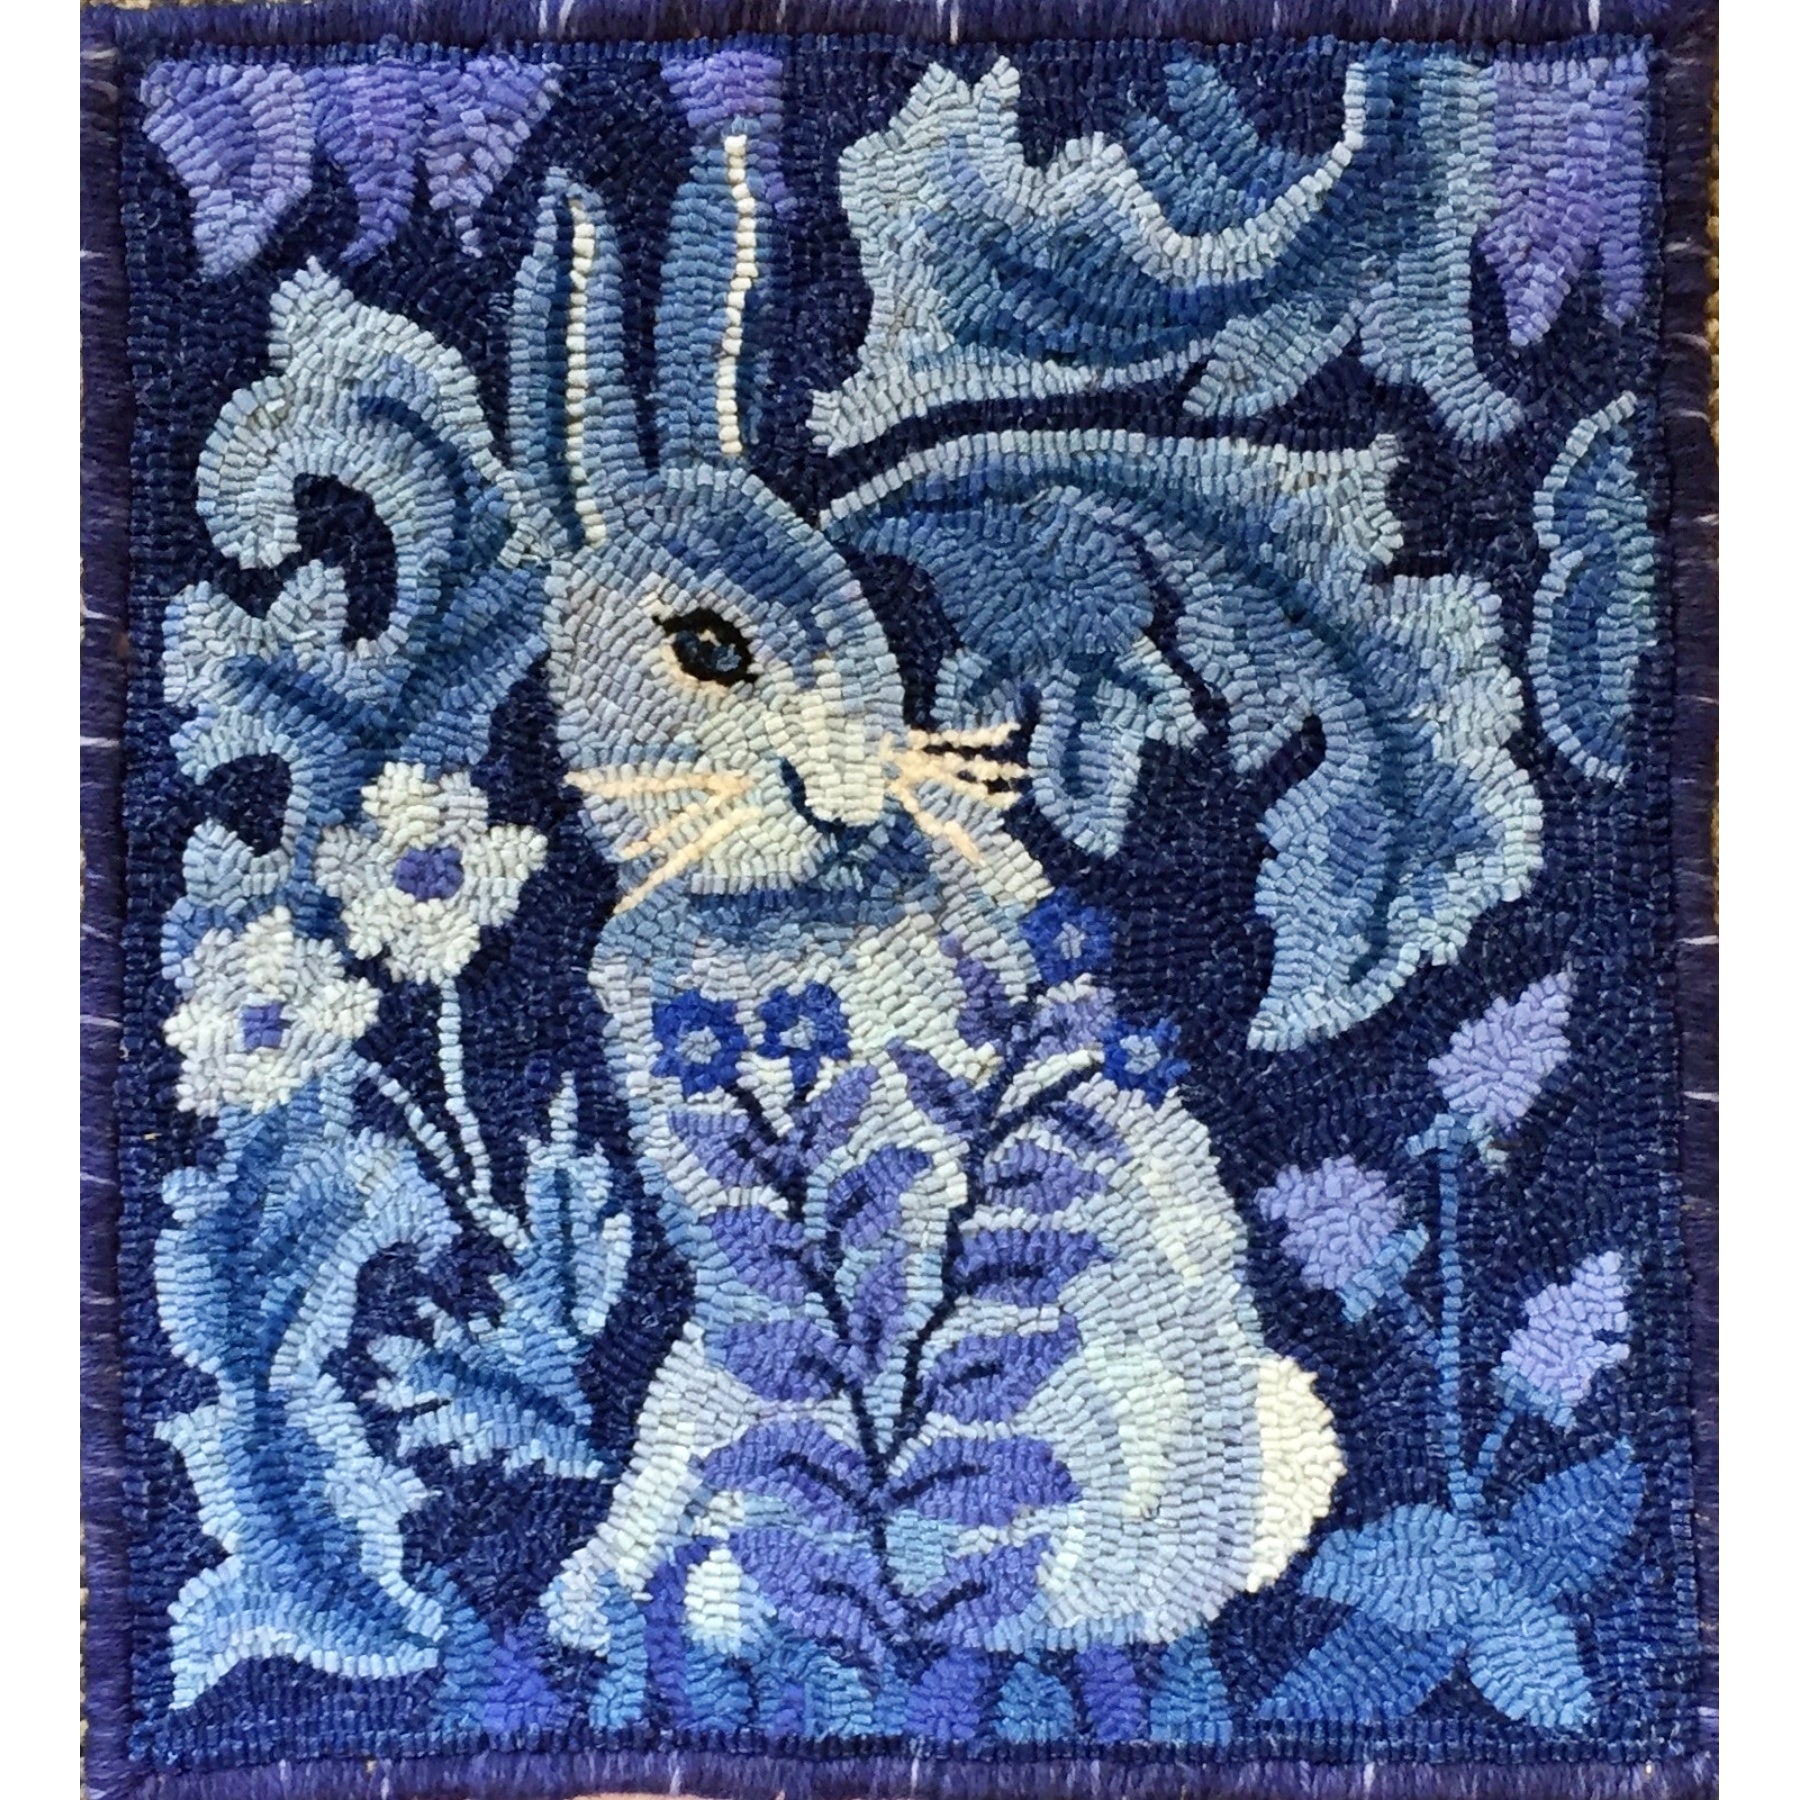 Morris Bunny, rug hooked by Margaret Bedle